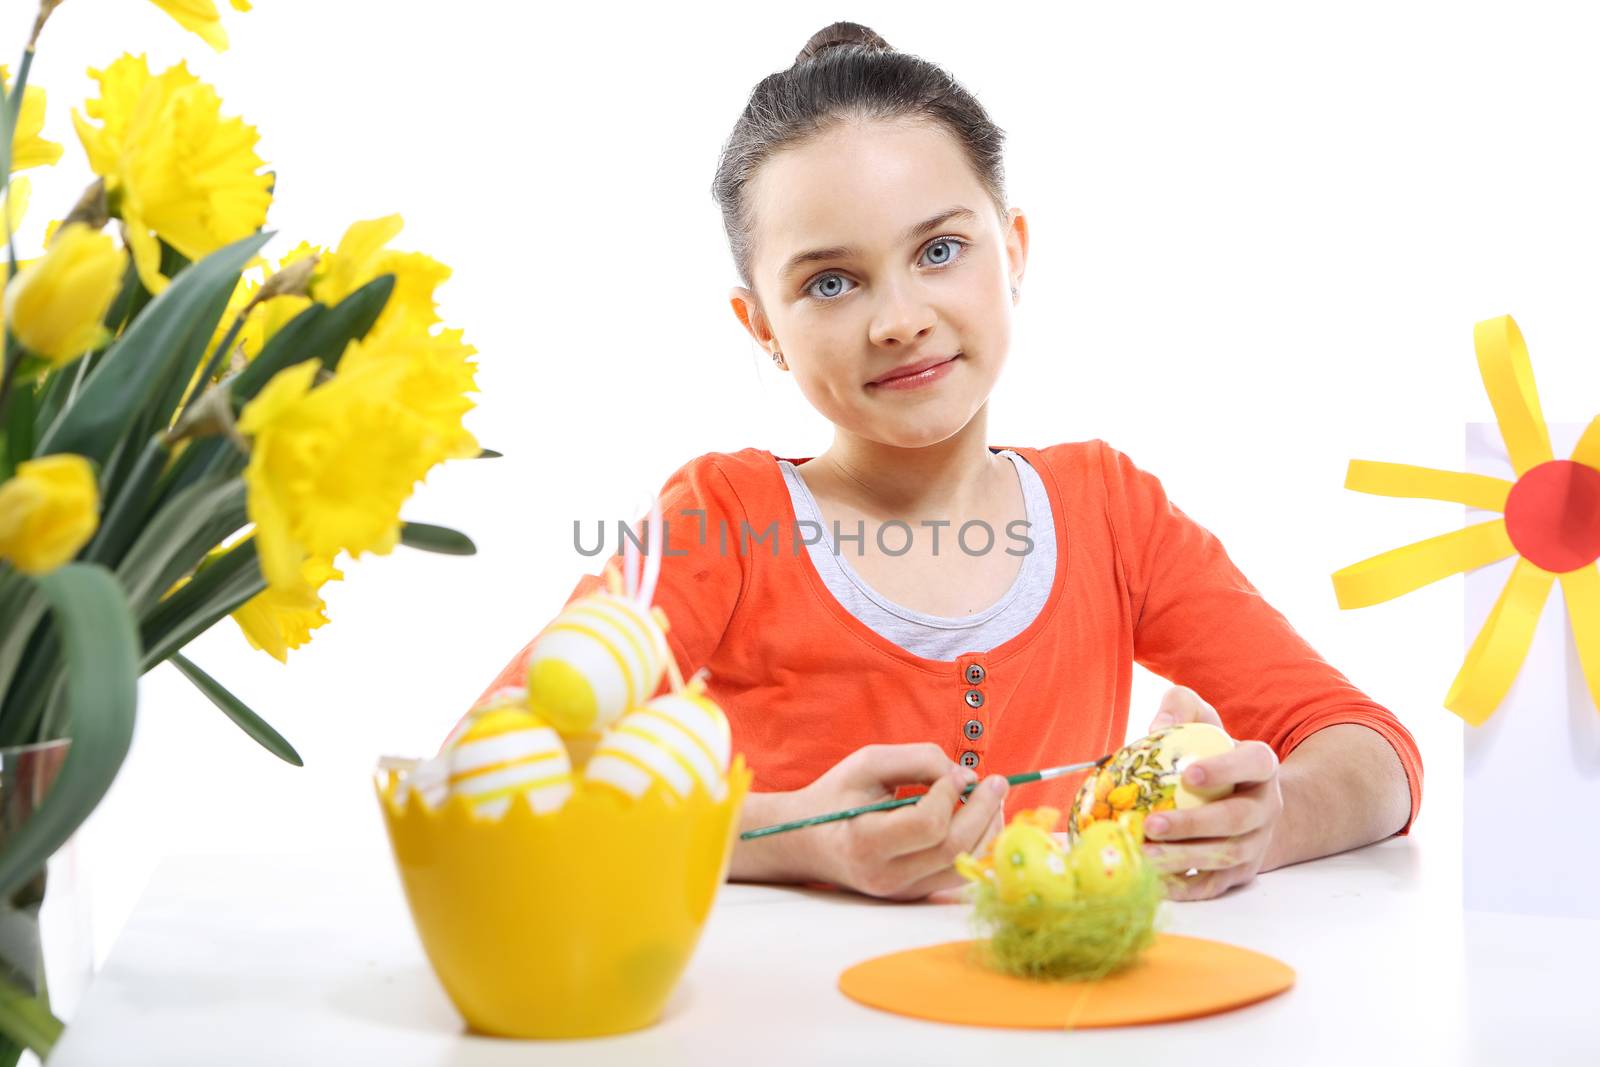 Cheerful little girl painting Easter eggs